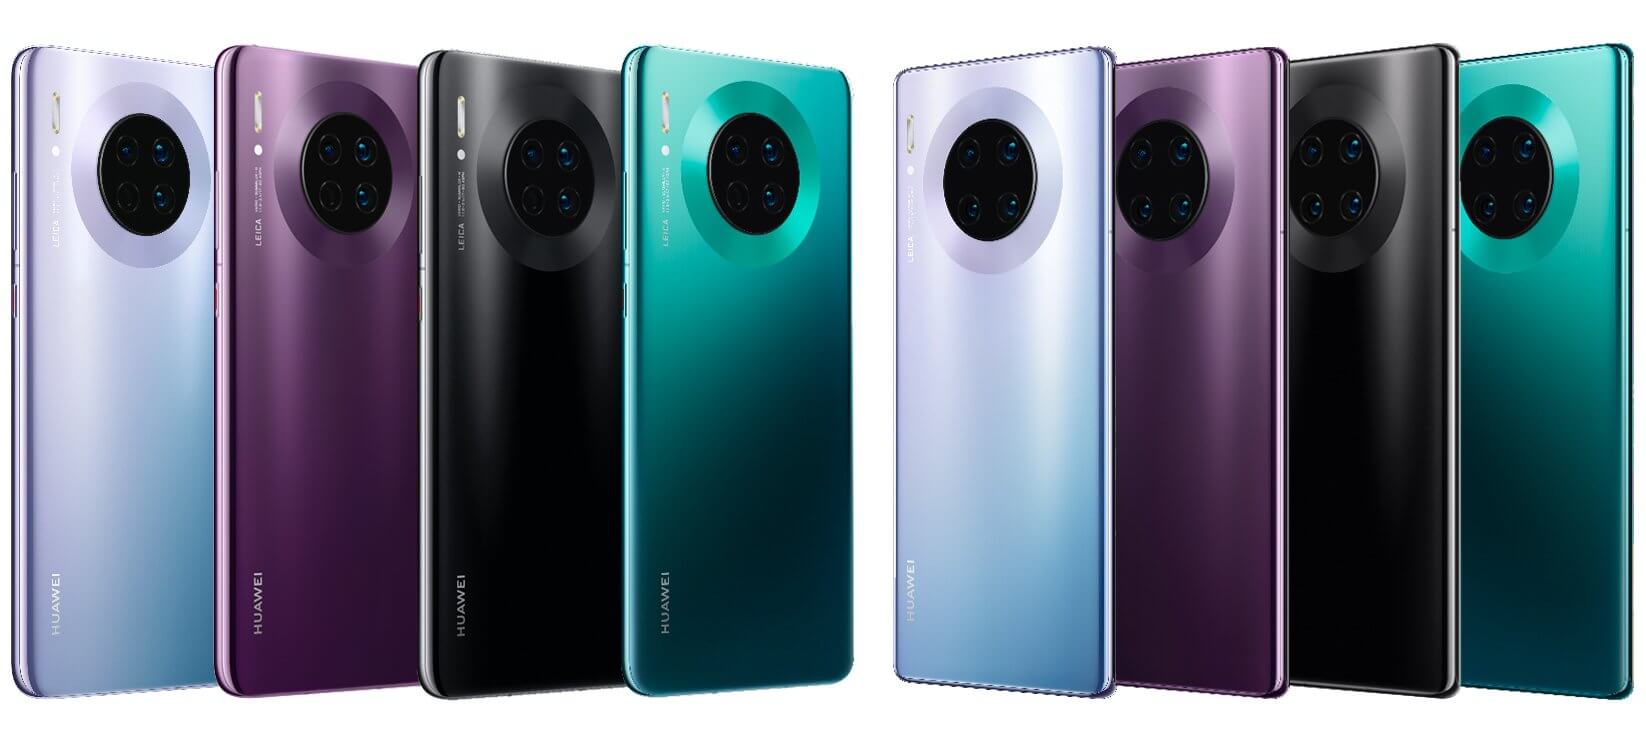 Huawei Mate 30 Reihe all colors